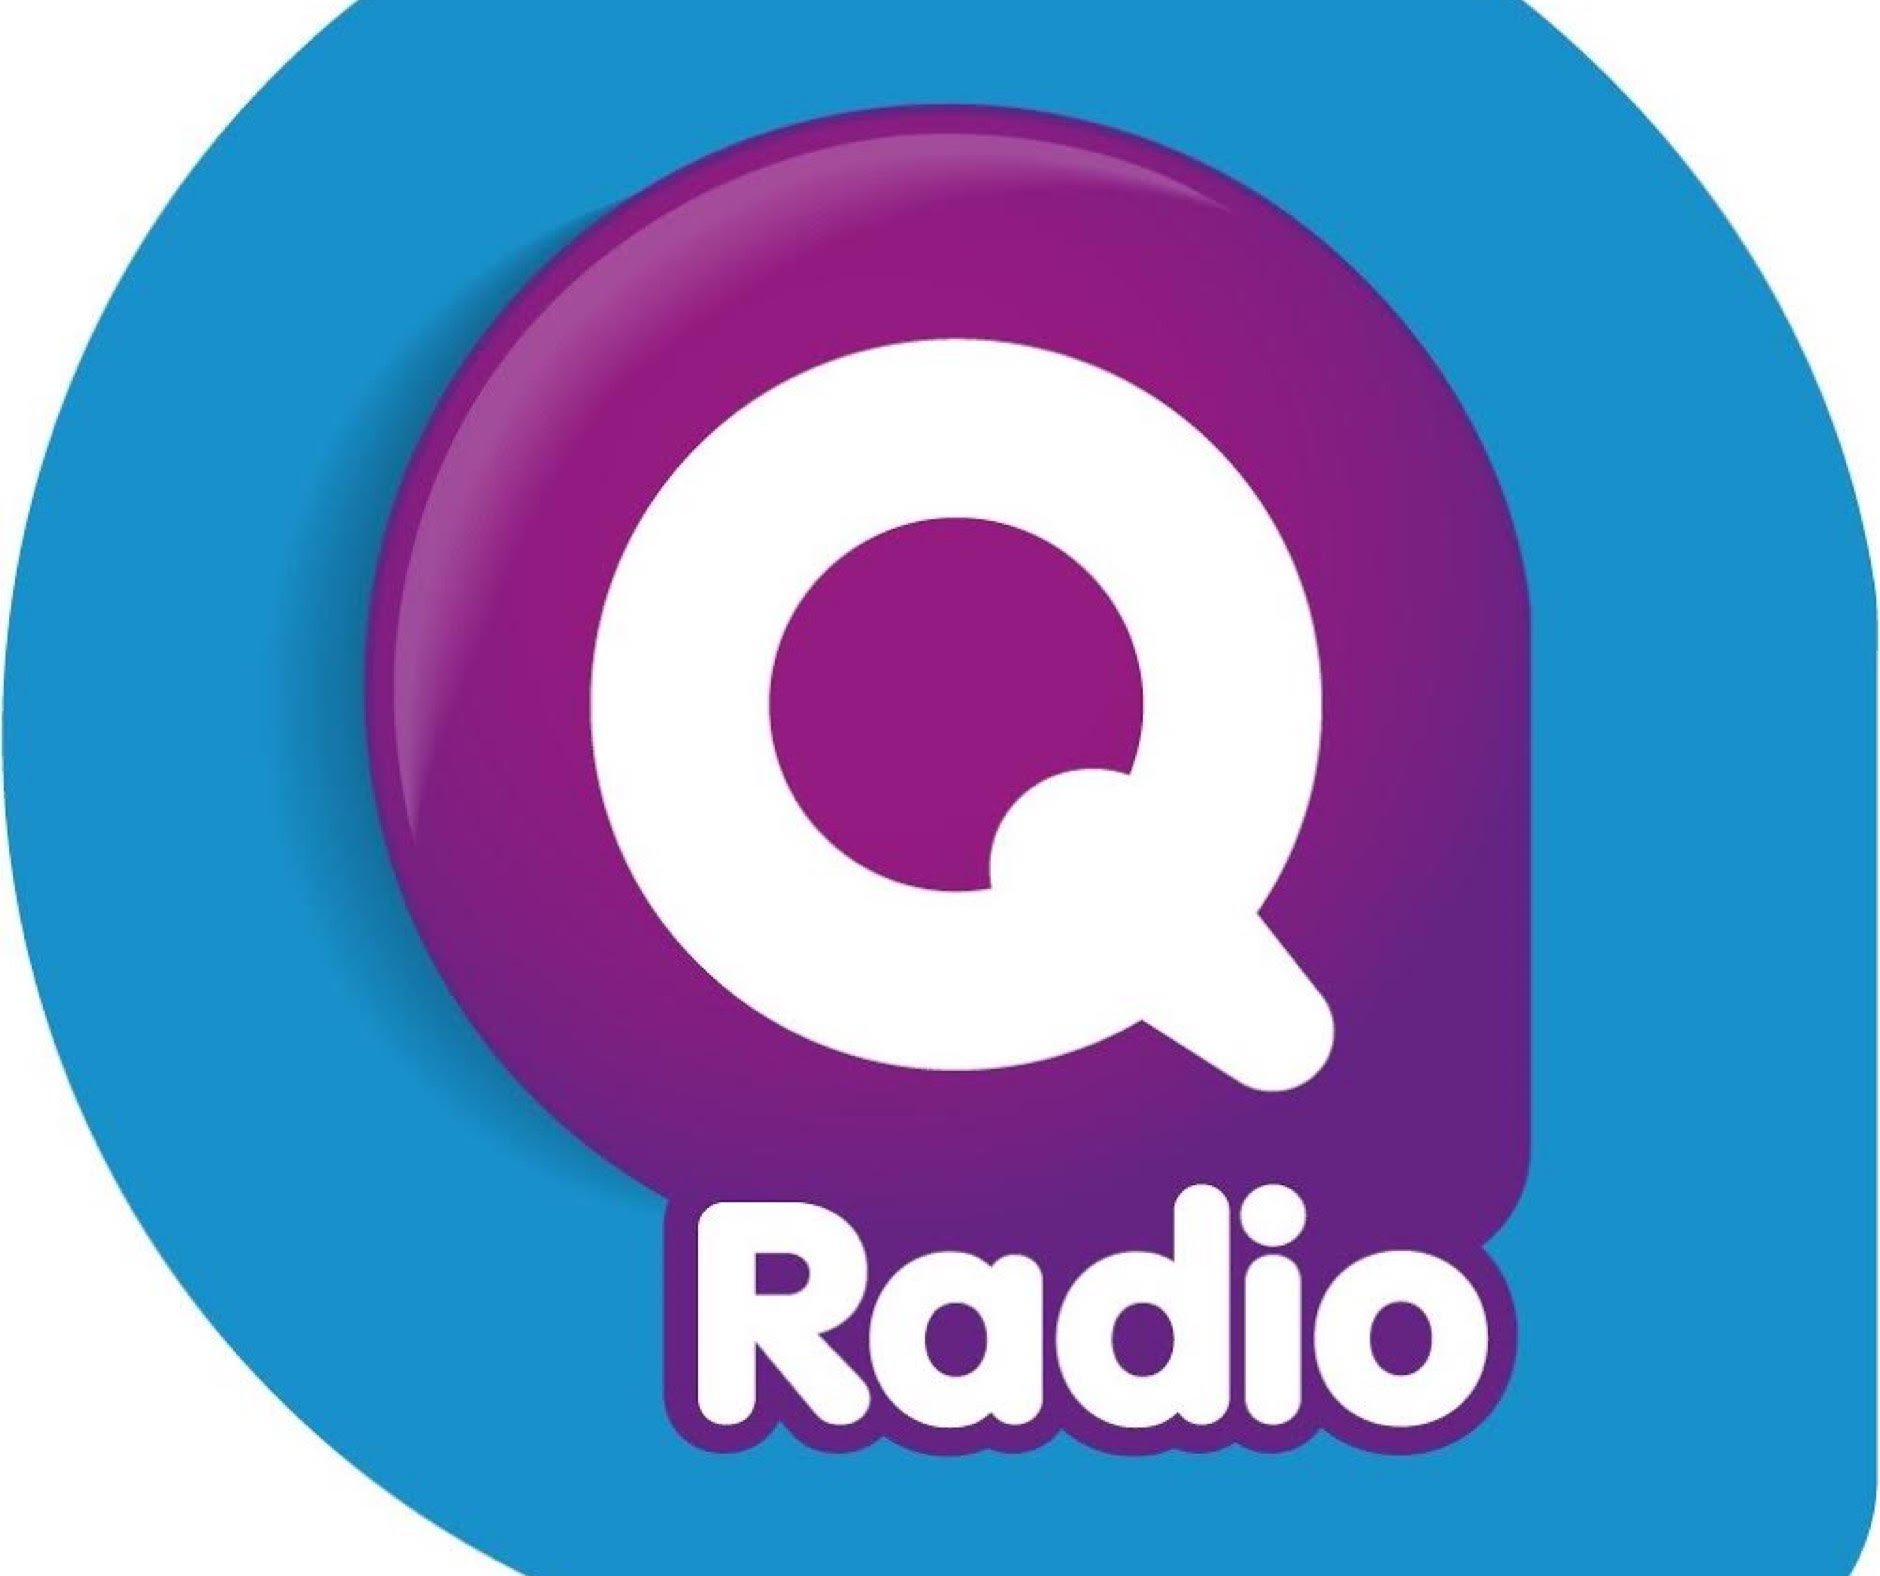 Q Radio Belfast 96.7 MHz FM Live Stream 24/7